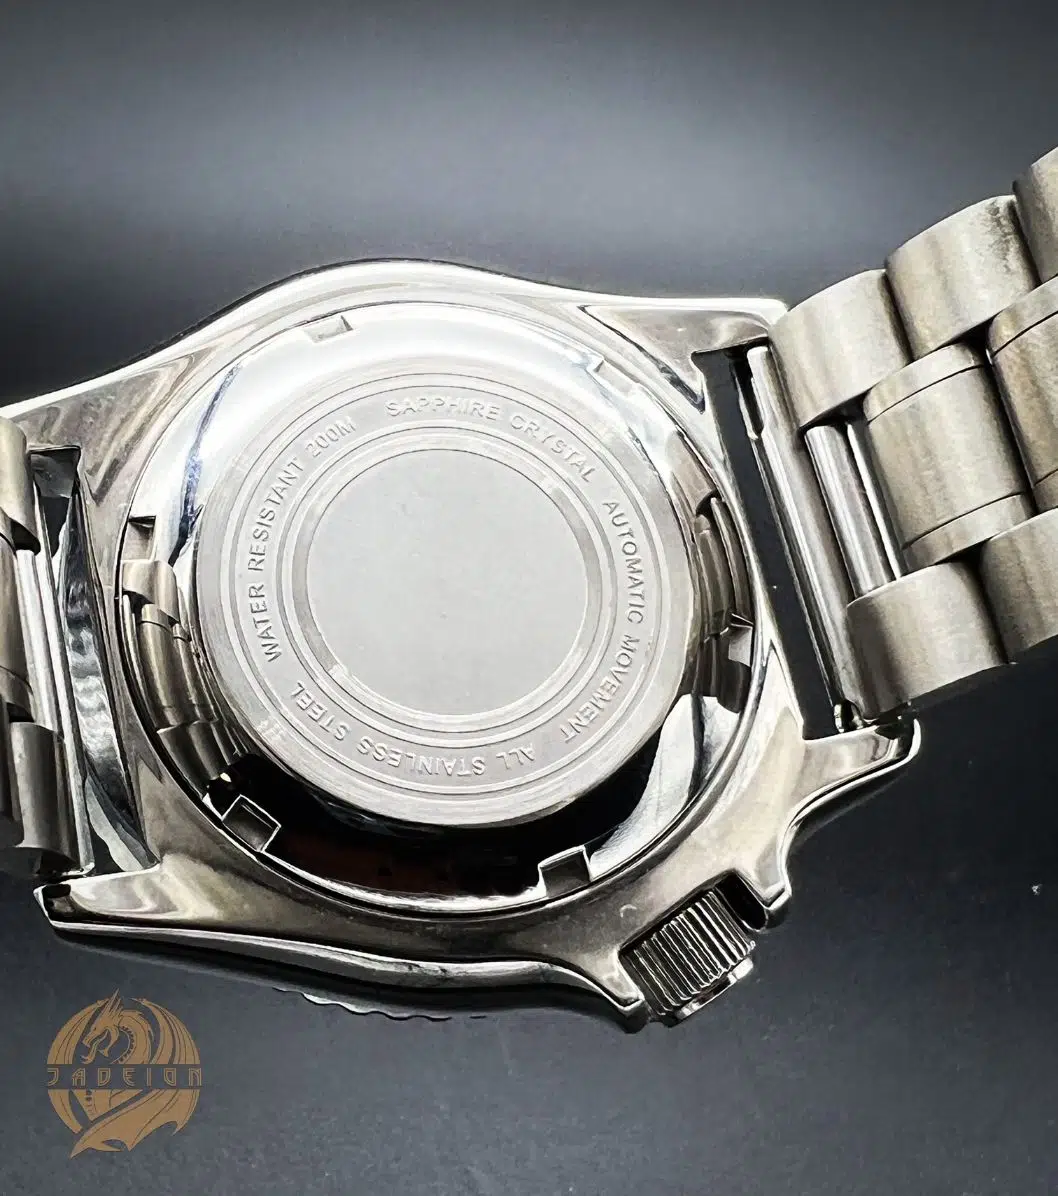 Jadeion Aqualume Gold SKX Seiko NH35 Automatic Watch – Jadeion shop